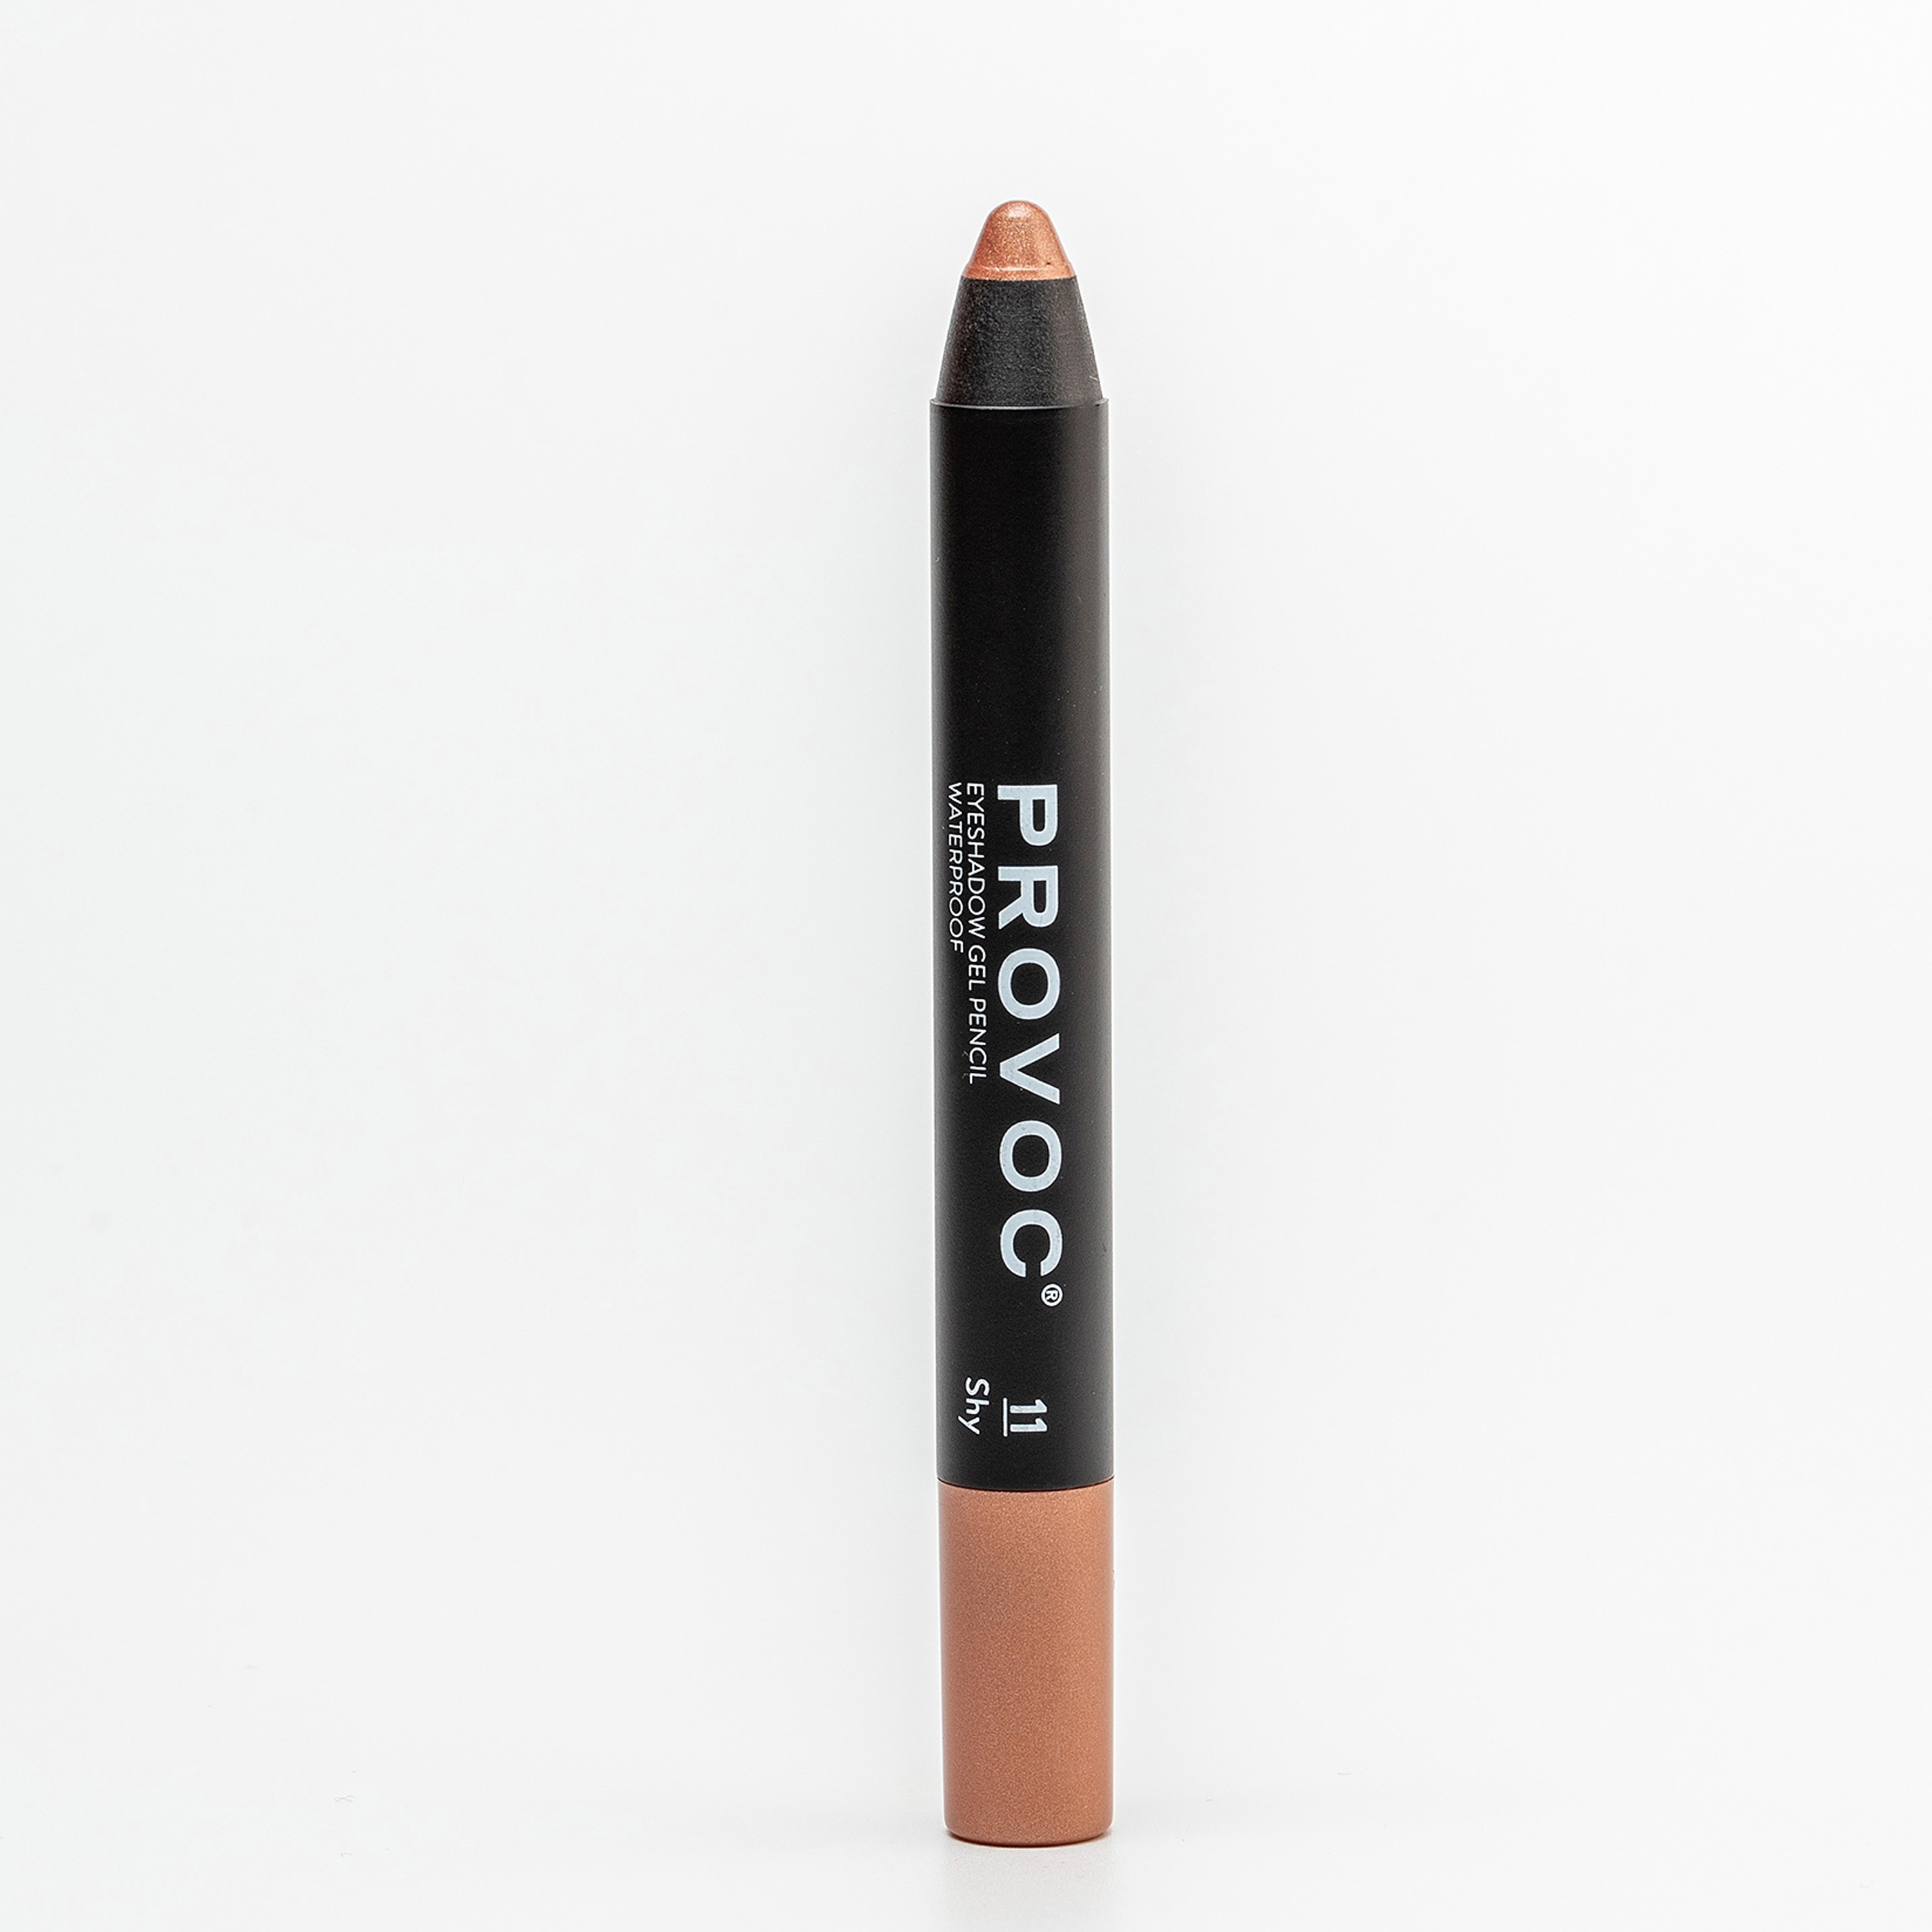 Тени-карандаш PROVOC Eyeshadow Pencil L водостойкие, шиммер 11 персиковый, 2,3 г водостойкие кремовые тени для век silky eyes 16829 02 steel blue 2 1 мл